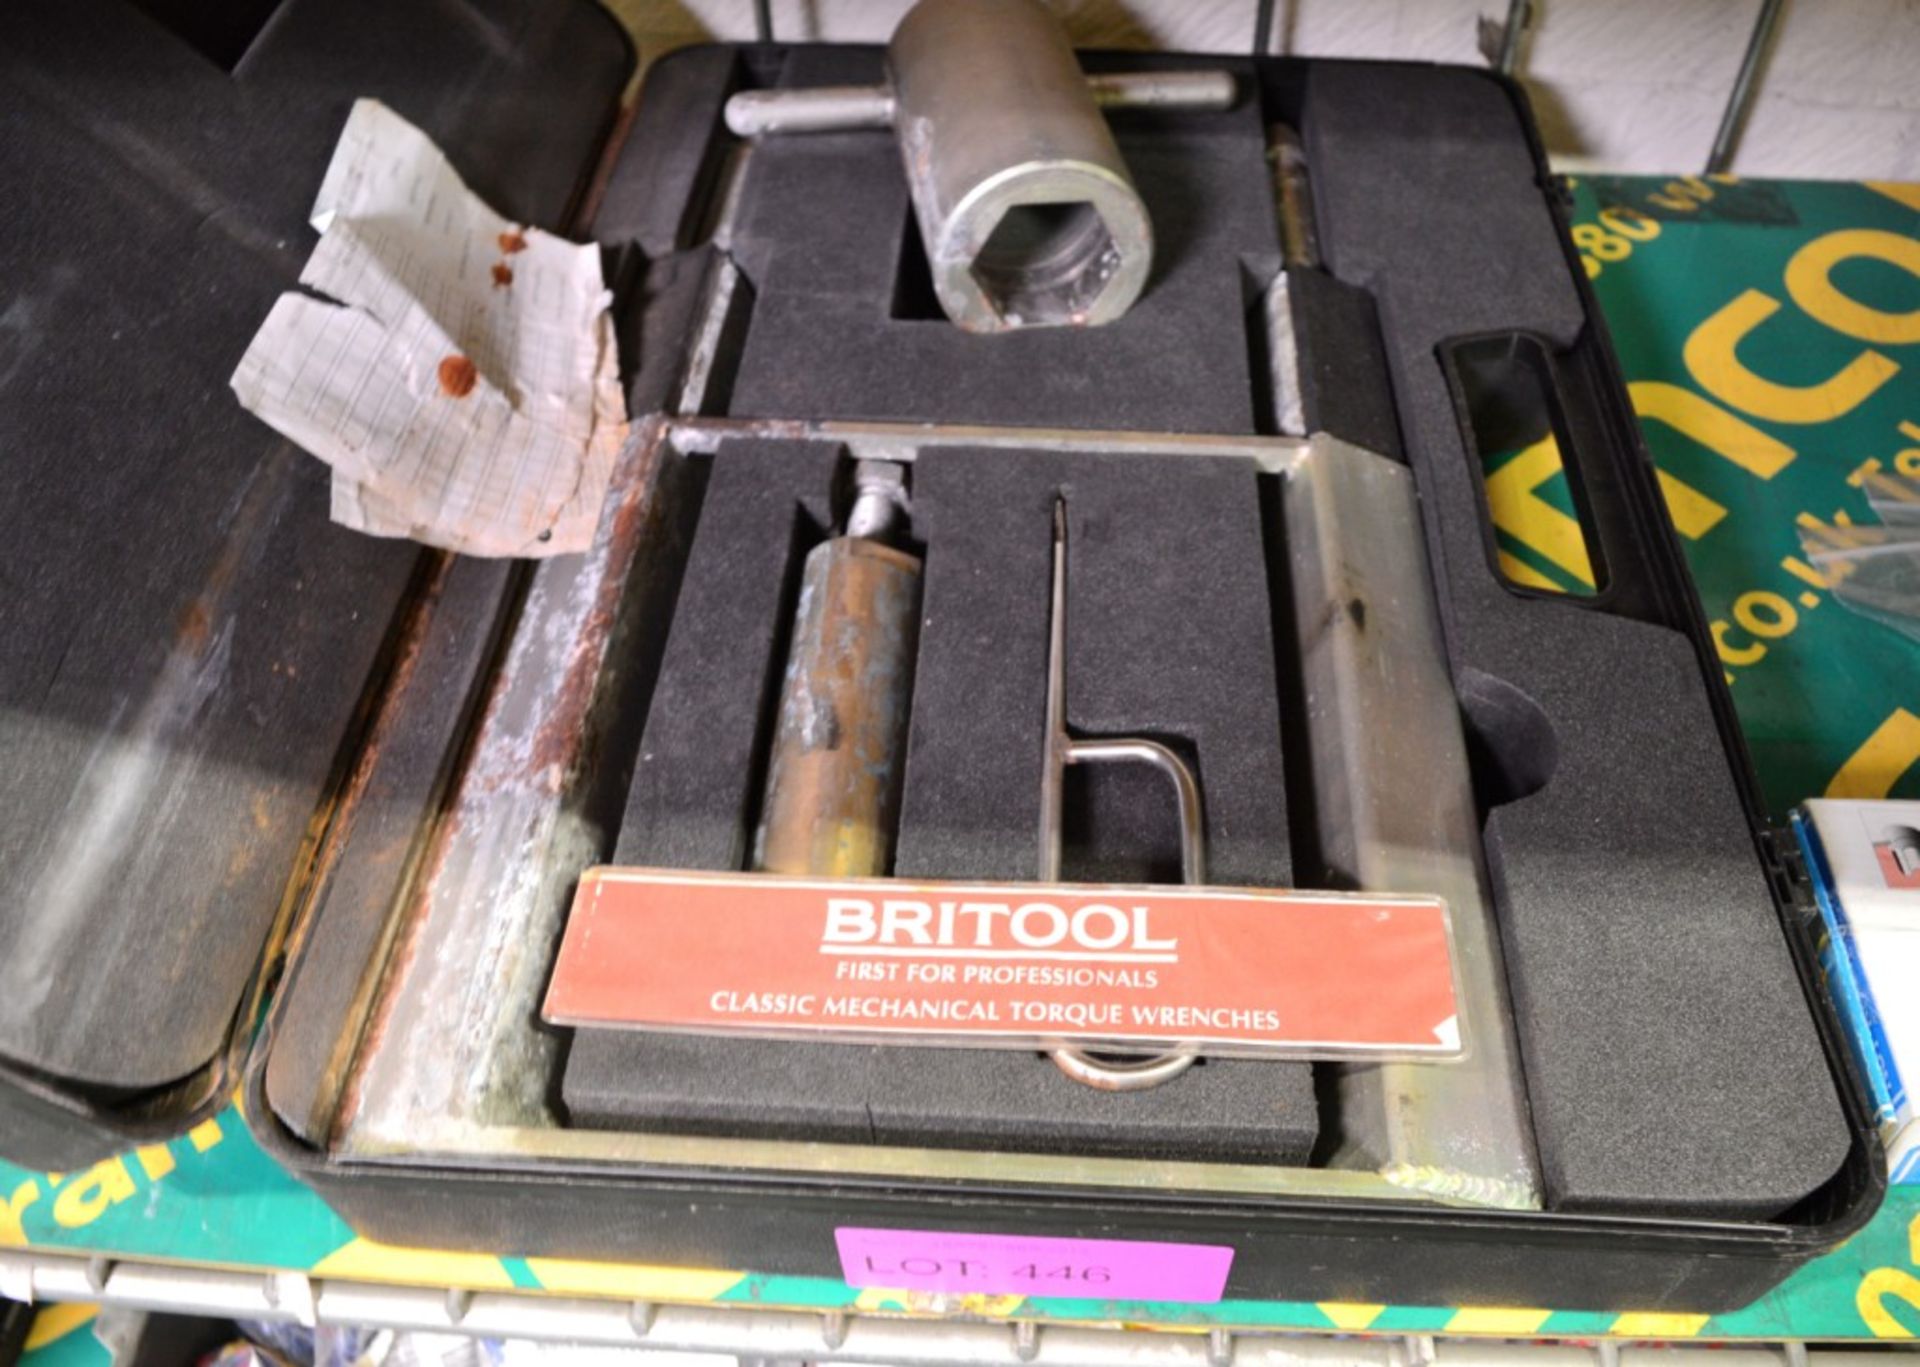 Britool Specialist Tool in Case - Image 2 of 2